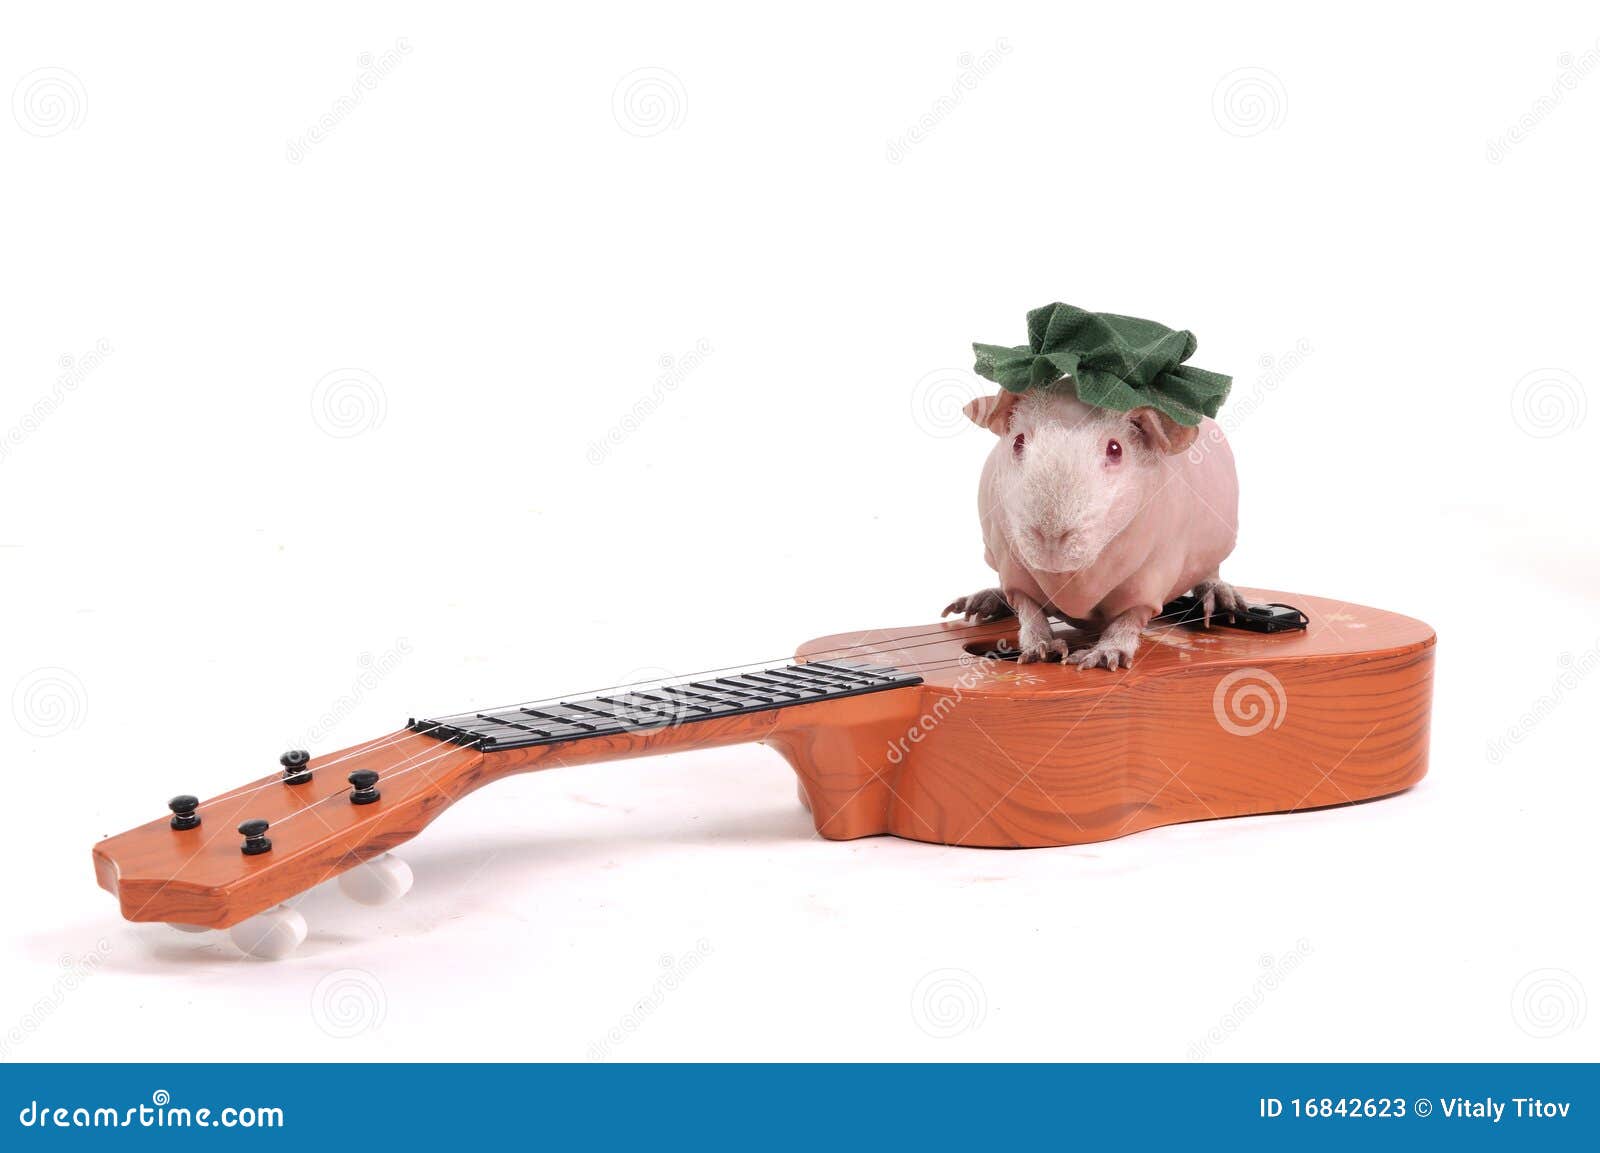 cavy on a guitar